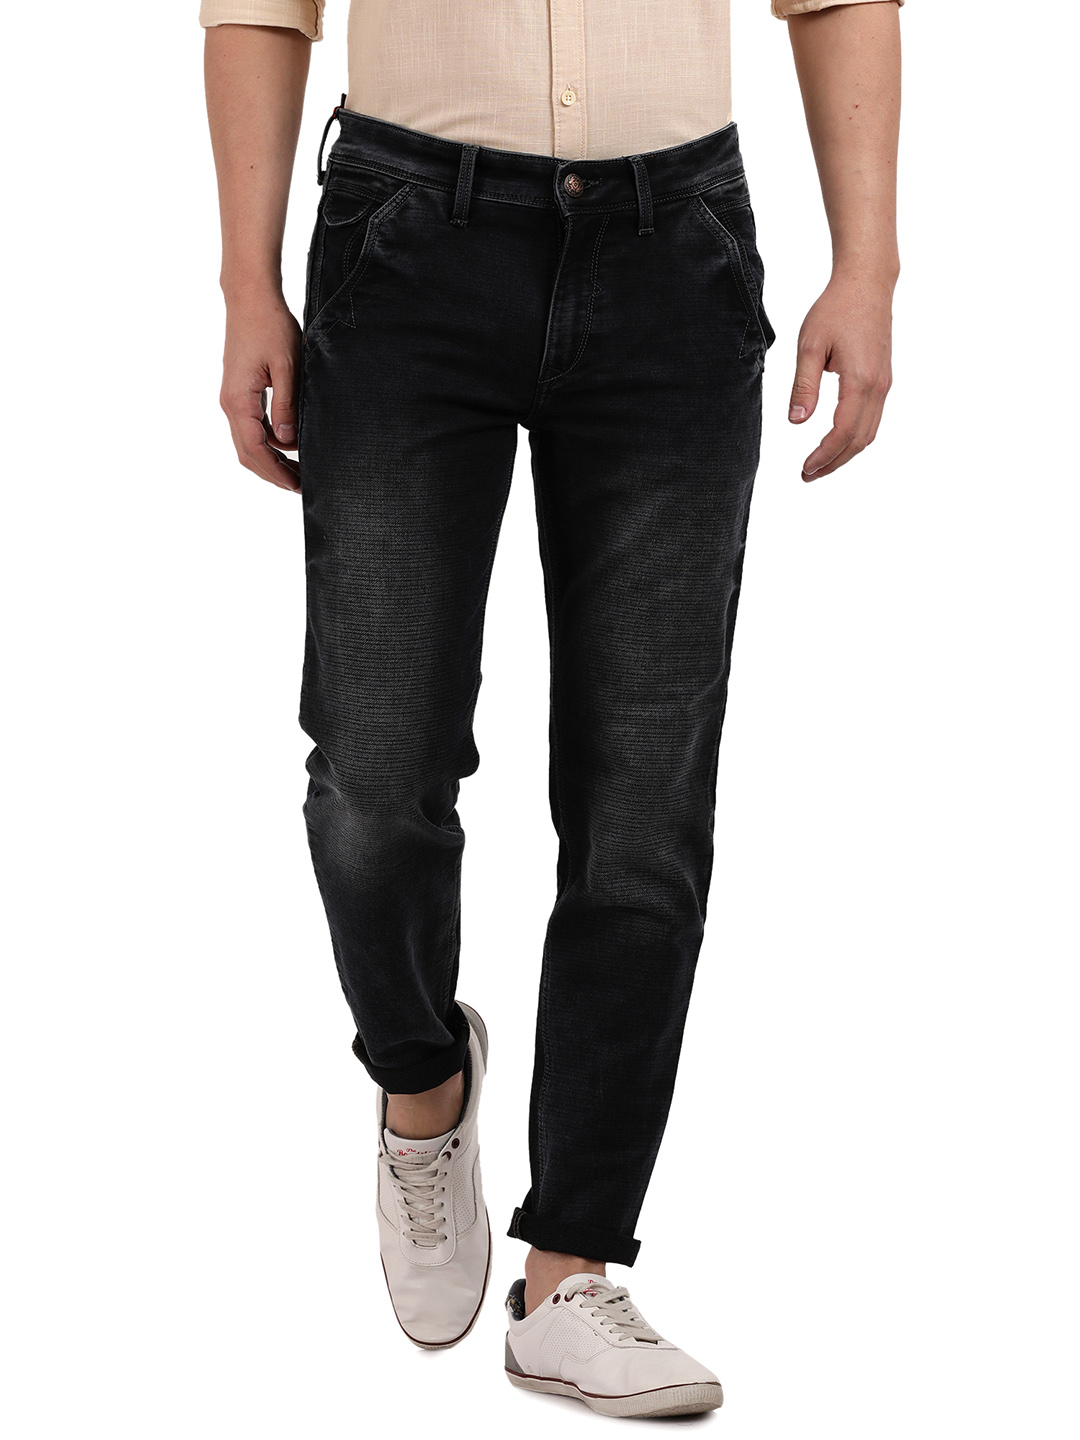 Ace of Diamond Men's Stretch Distressed Faded Denim Jeans Size 36x32 Black  | eBay